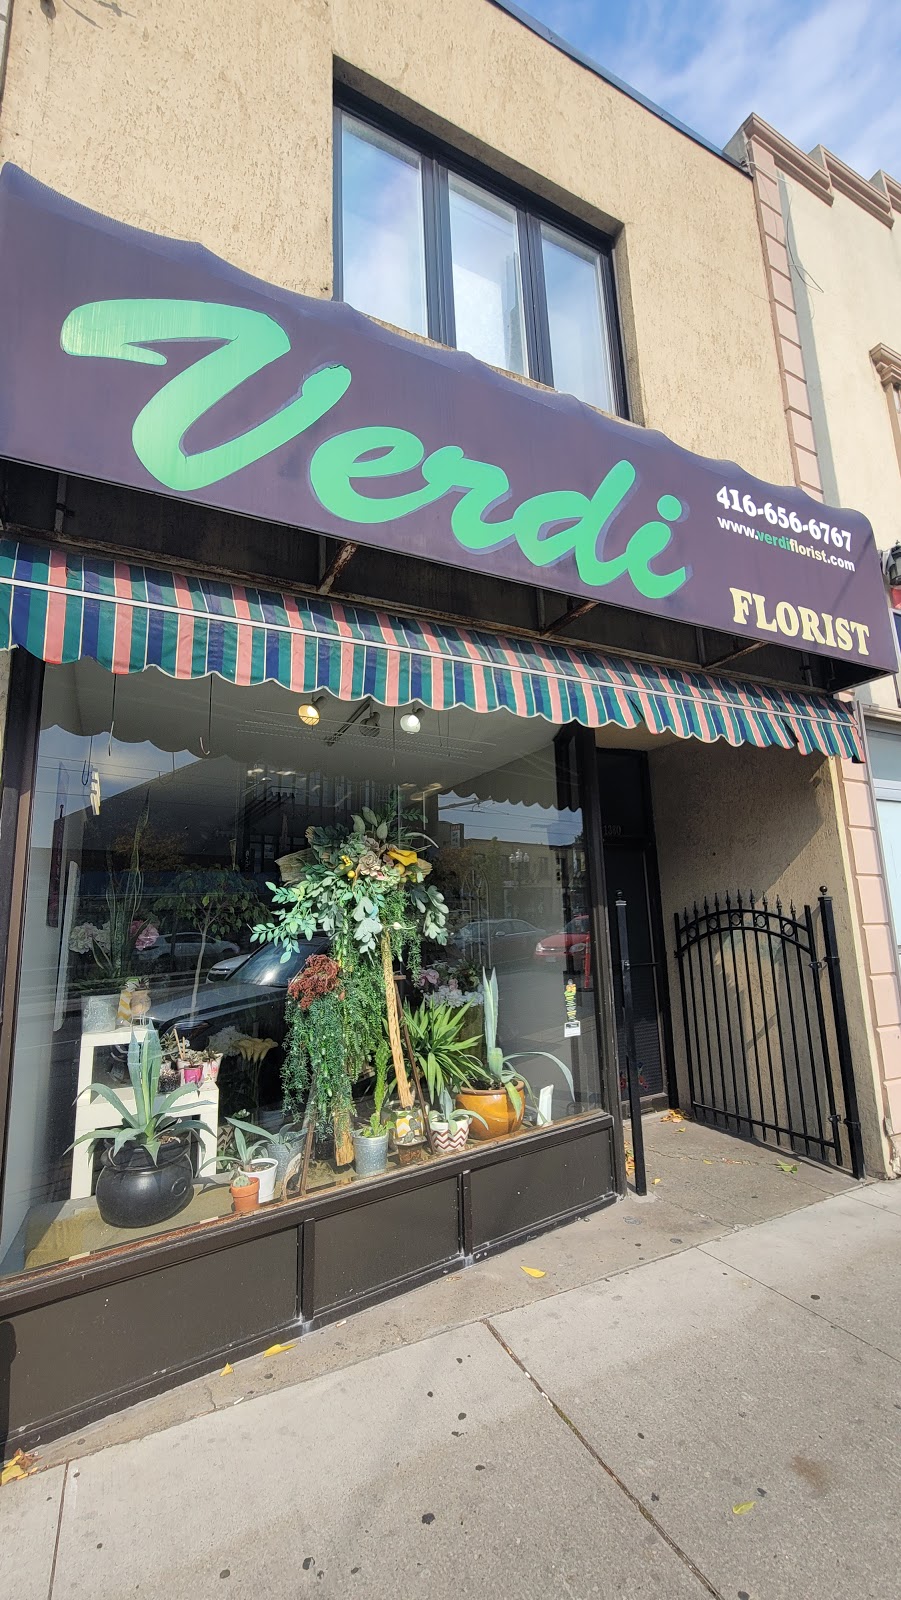 Verdi Florist - Closed Until Further Notice | florist | 1380 St Clair Ave W, Toronto, ON M6E 1C6, Canada | 4166566767 OR +1 416-656-6767